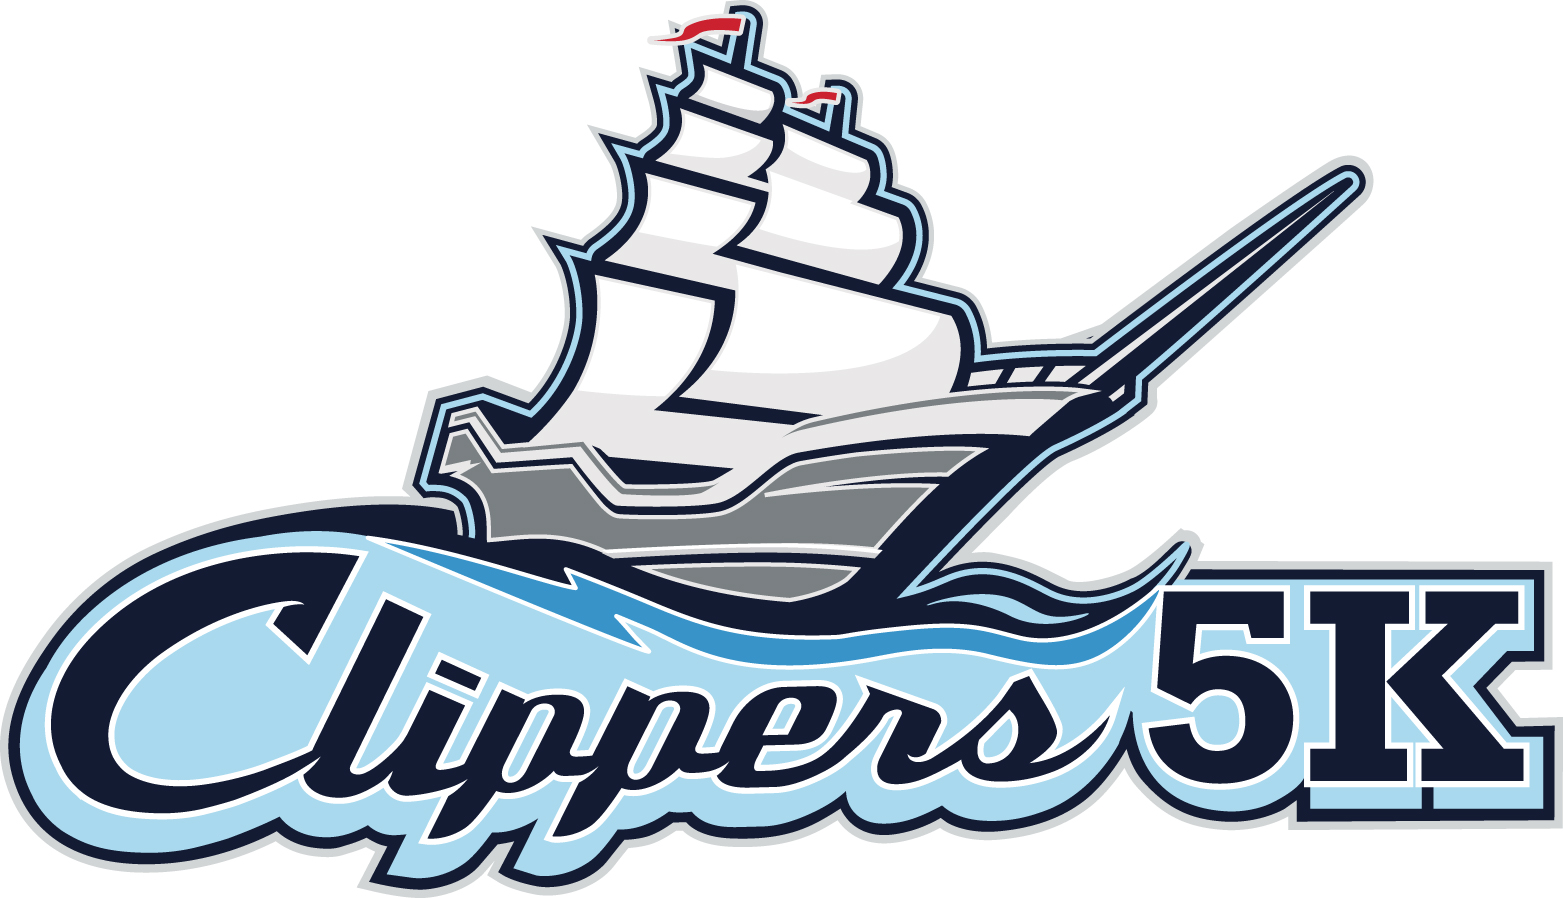 Columbus Clippers 5K logo